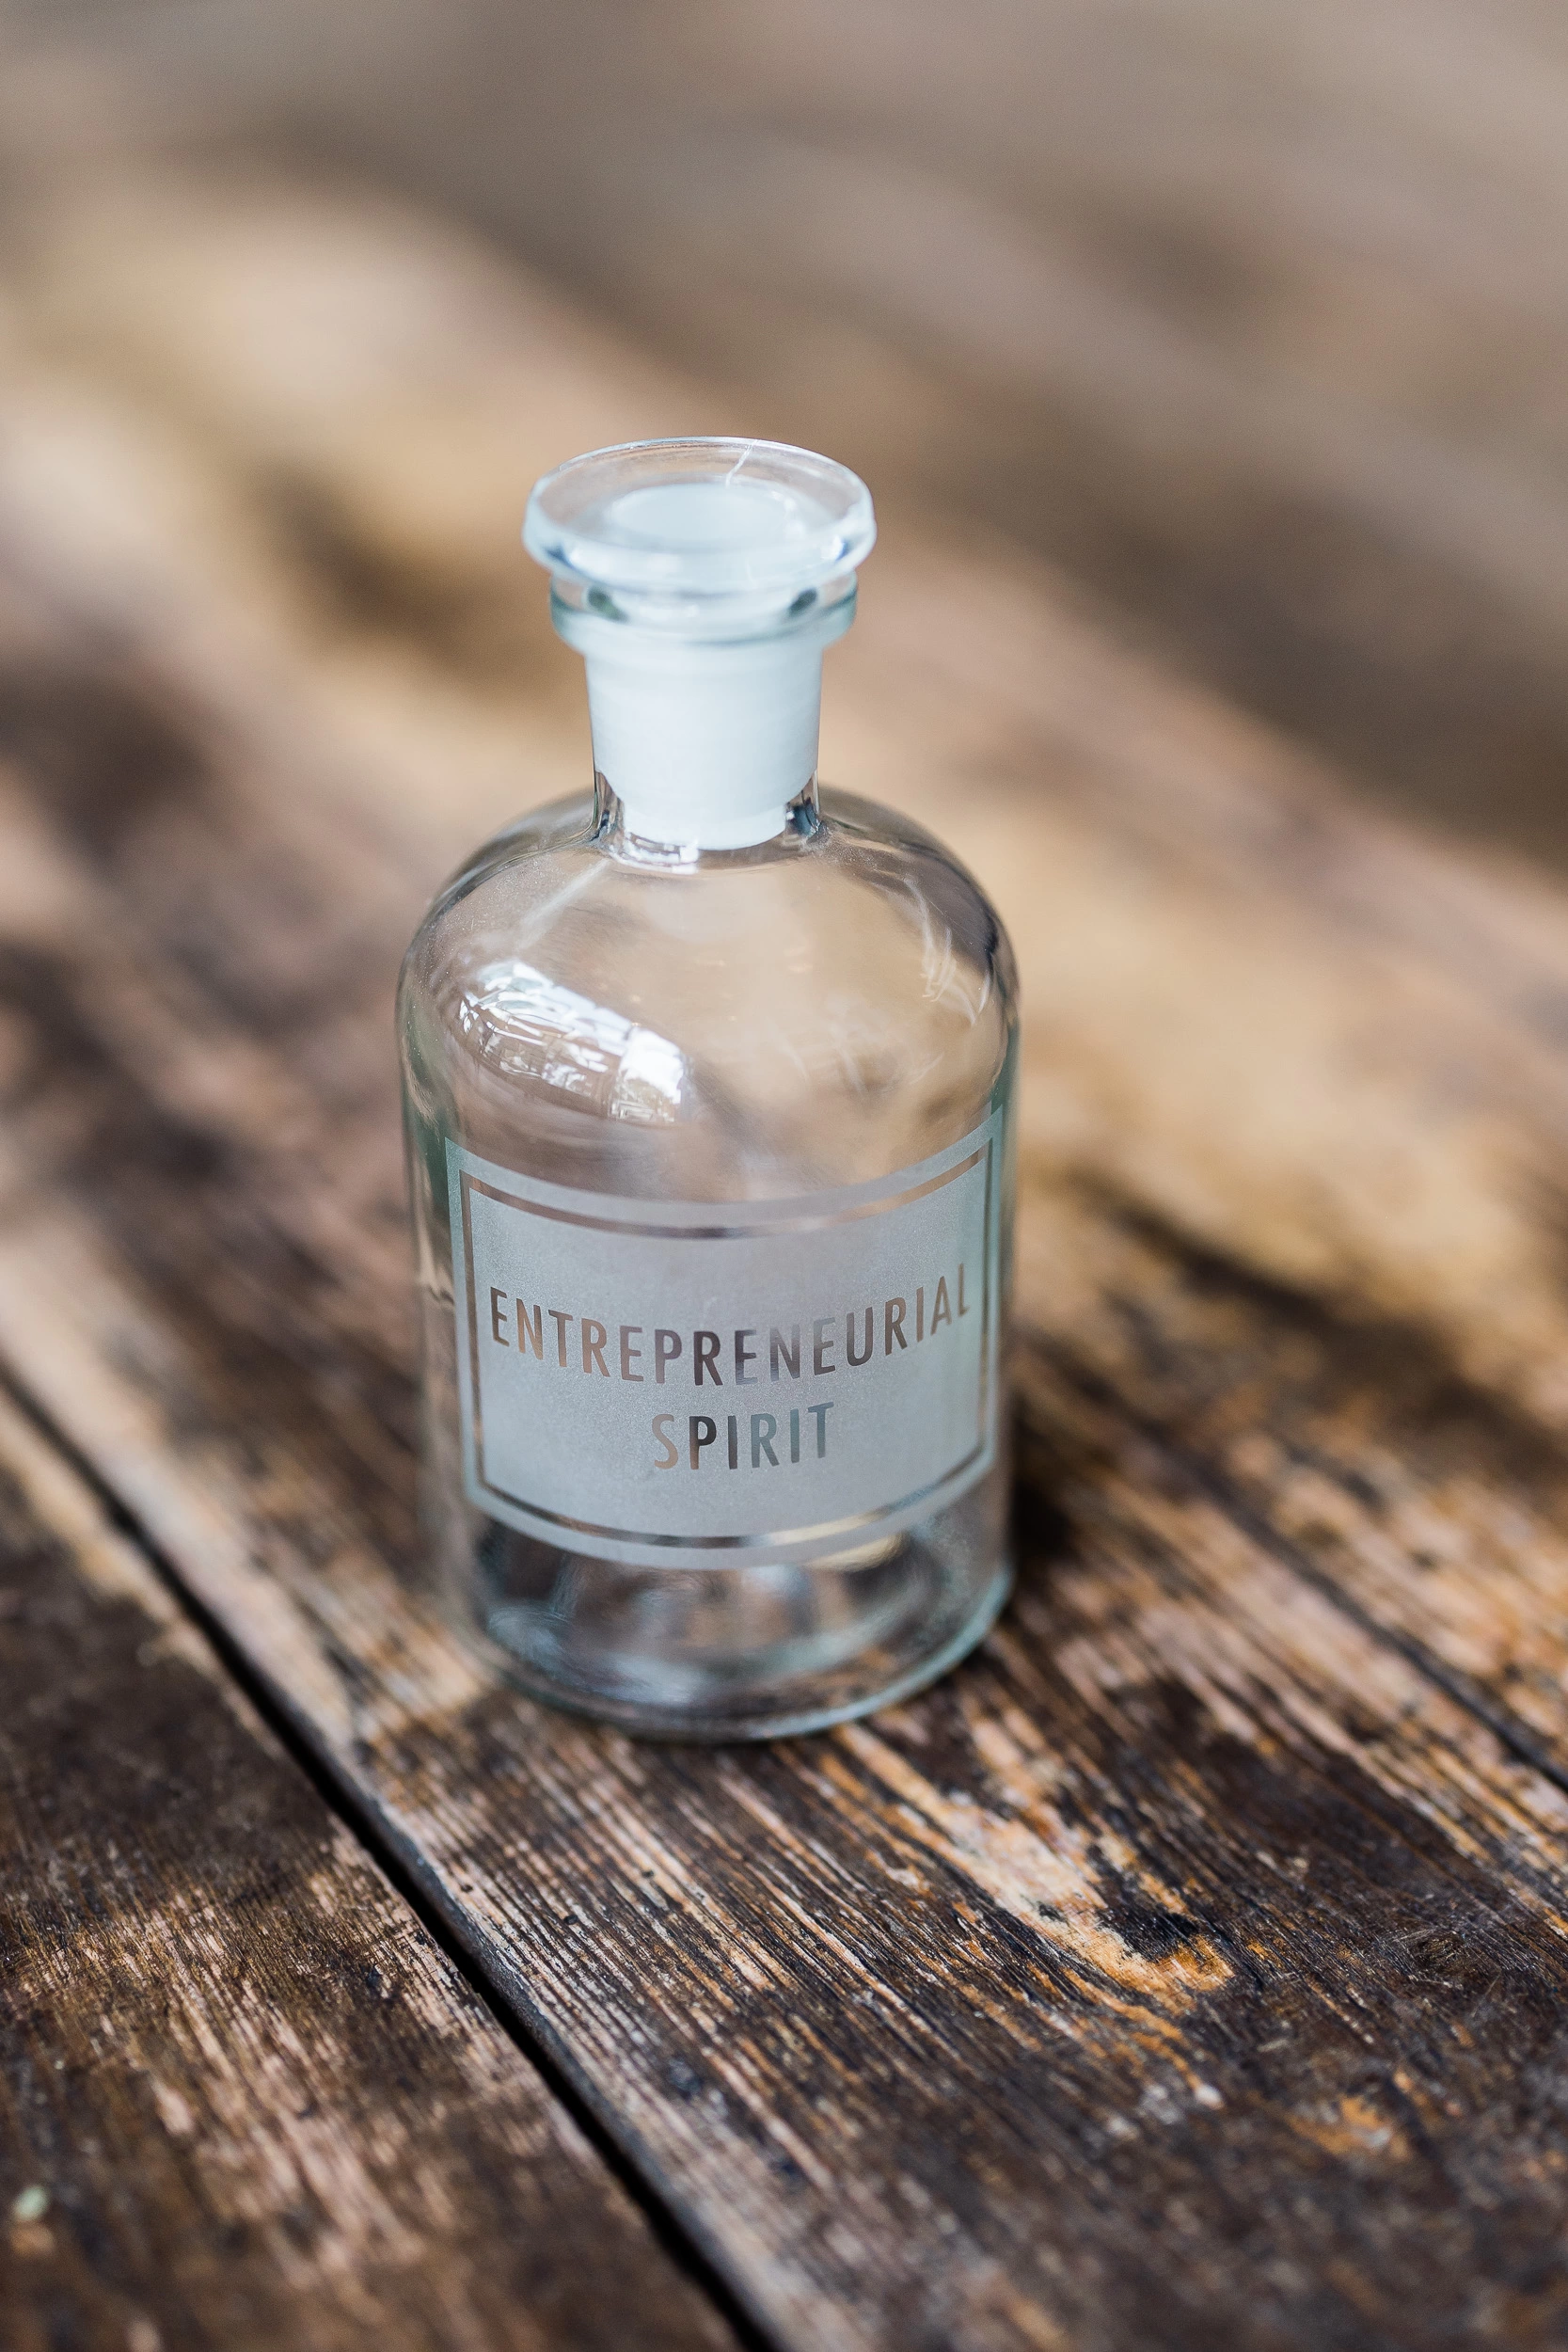 Entrepeneurial Spirit Vinegar and Brown glass jar